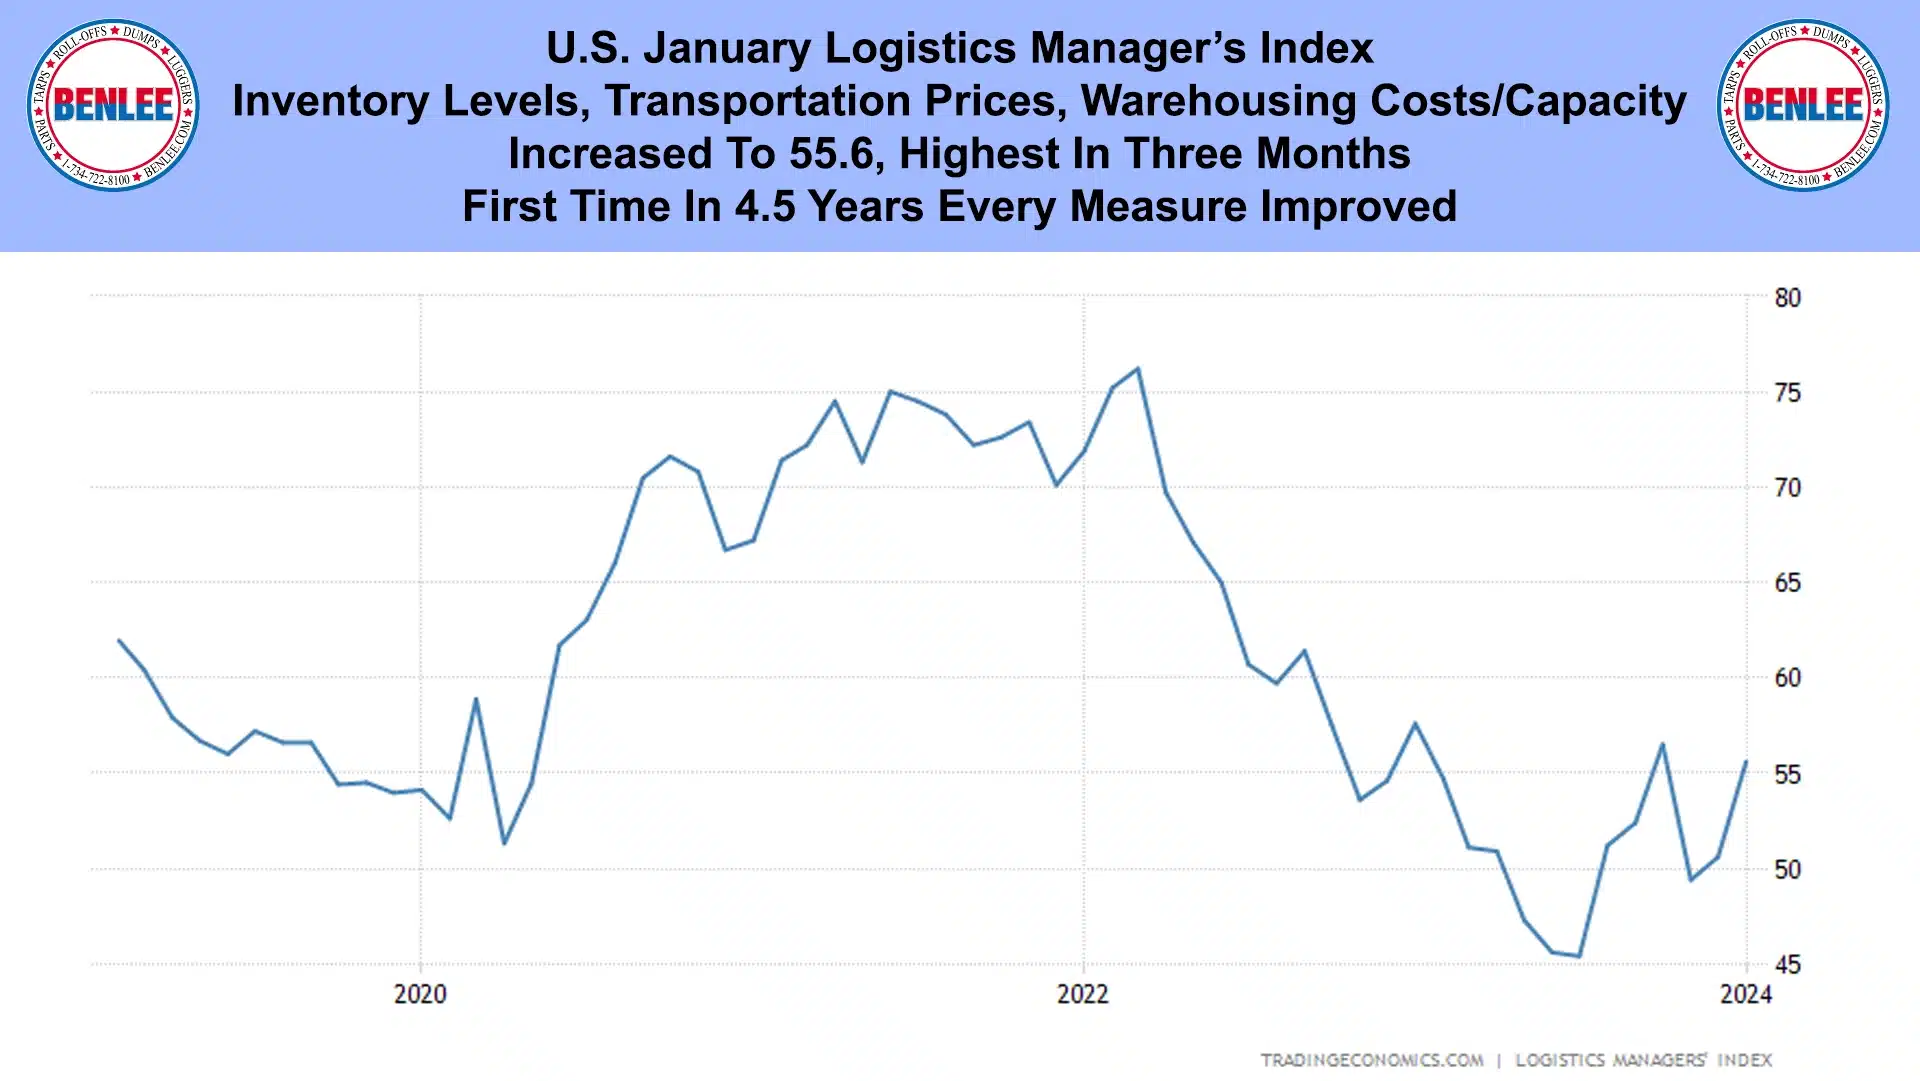 U.S. January Logistics Manager's Index